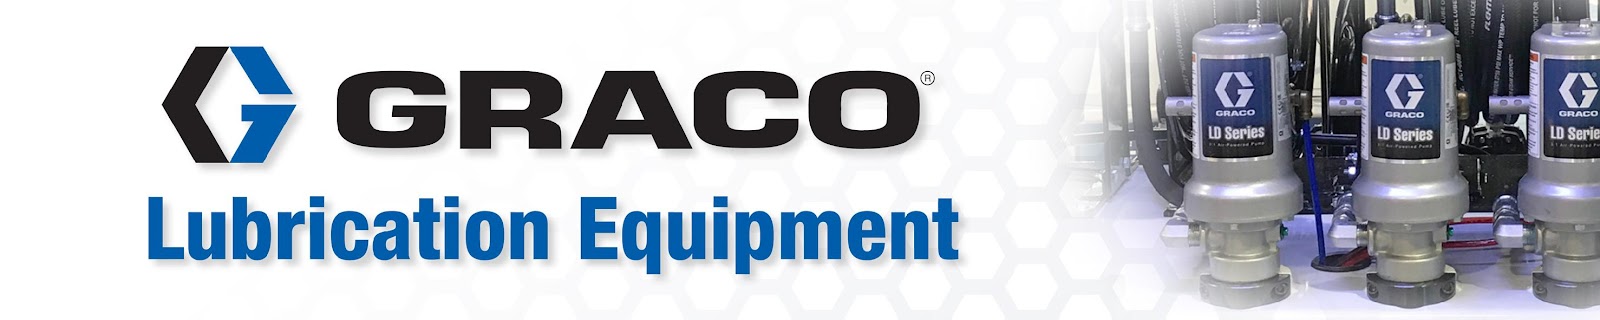 graco-lubrication-equipment